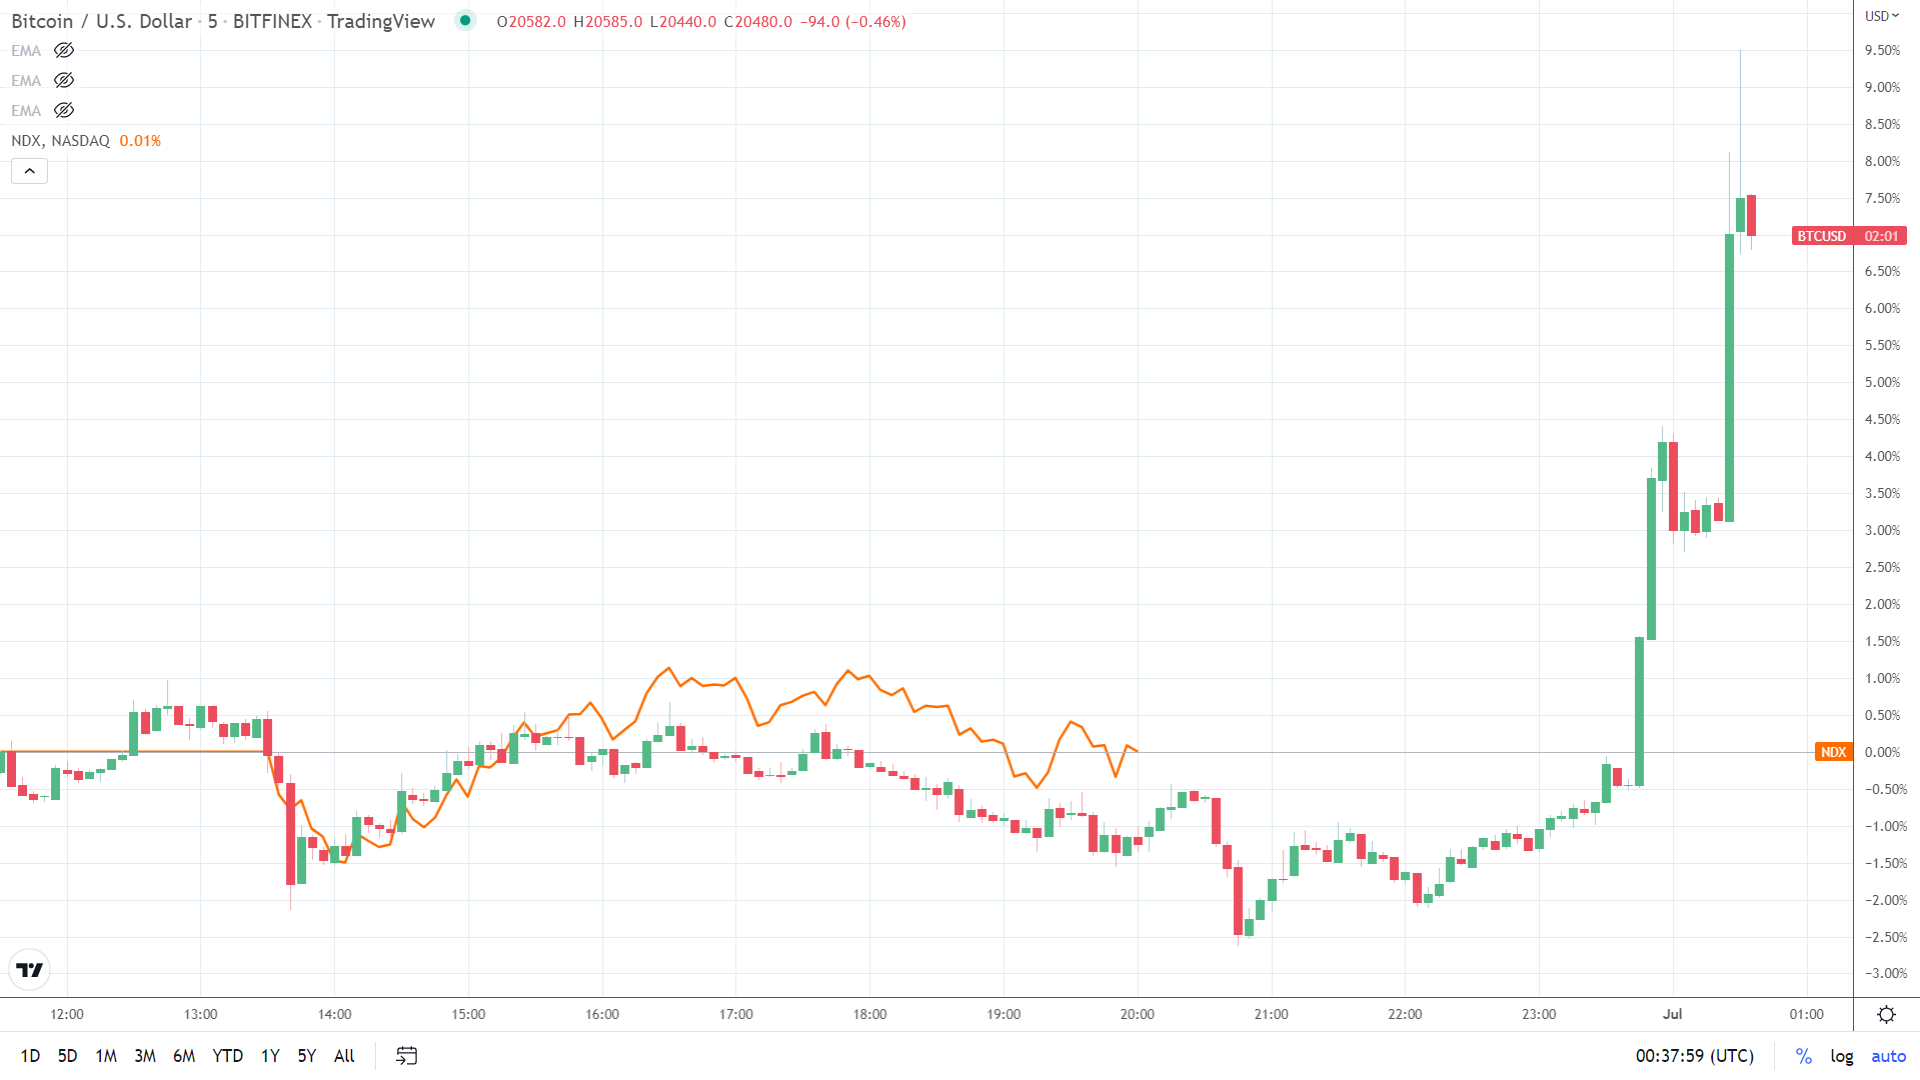 BTC-NASDAQ correlation